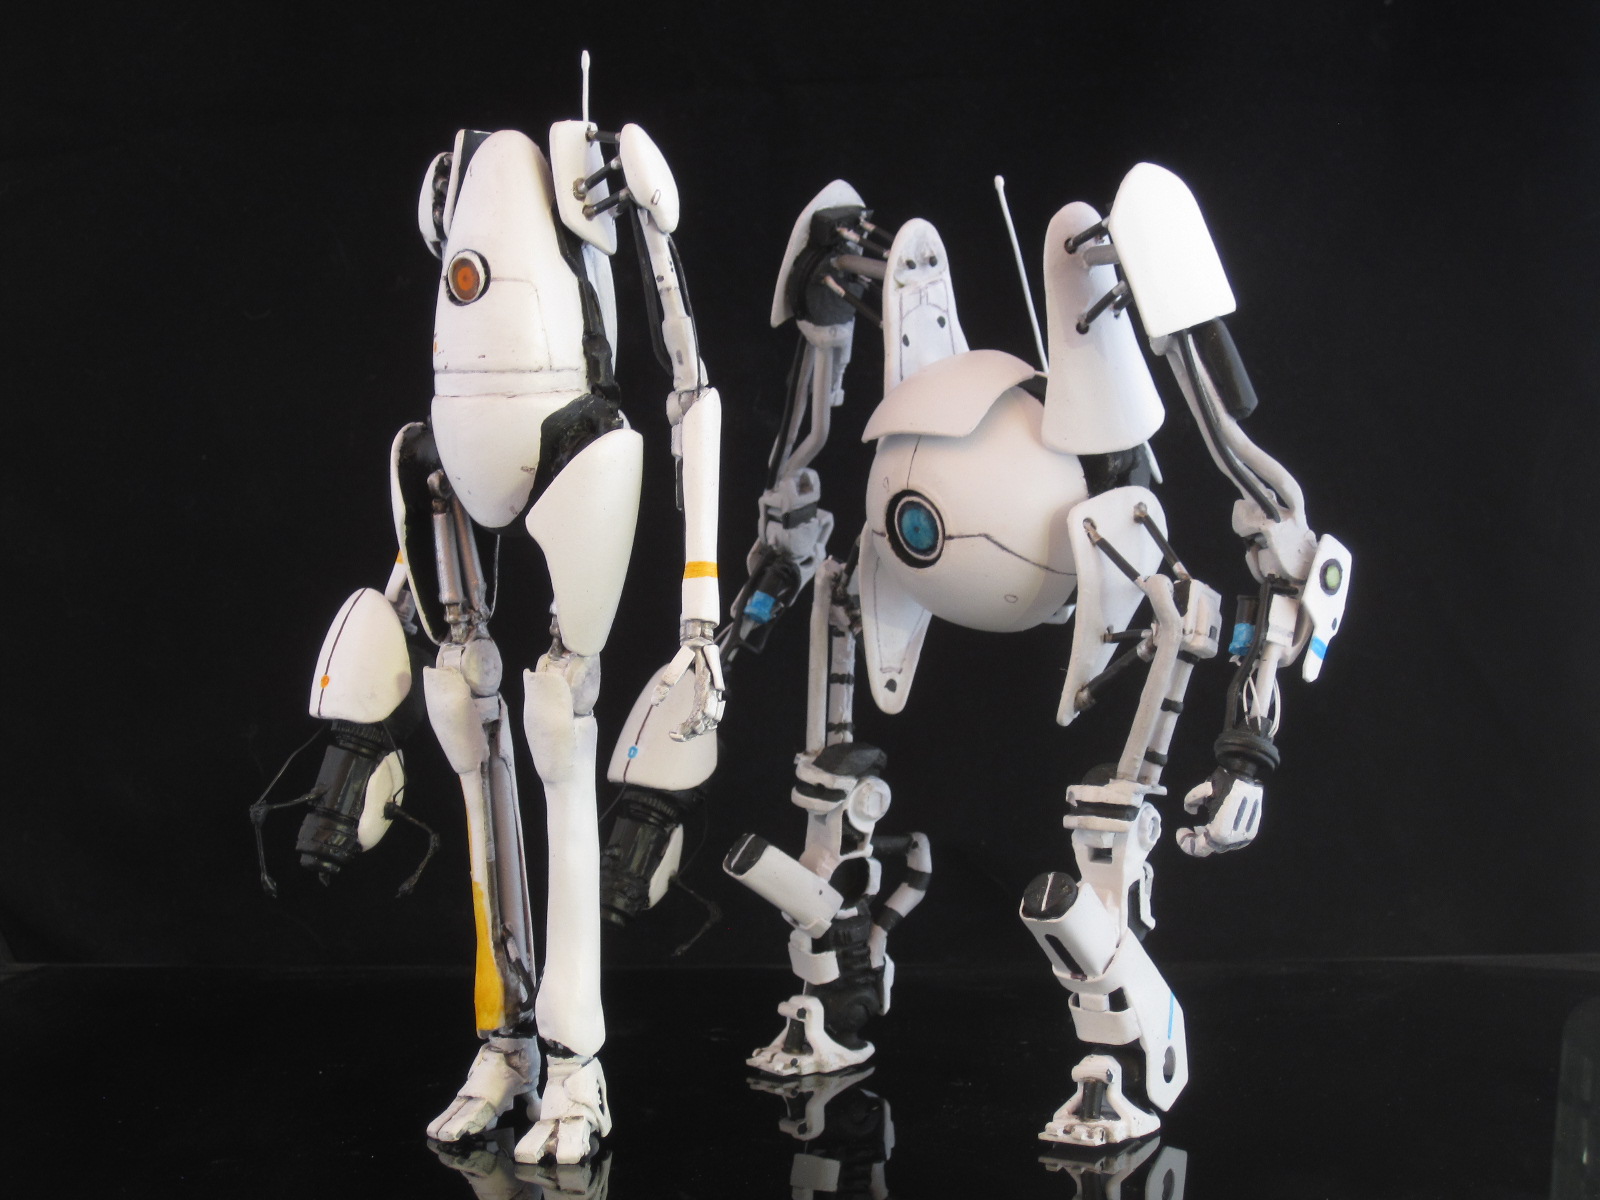 portal 2 robots Atlas and P-body action figure toys